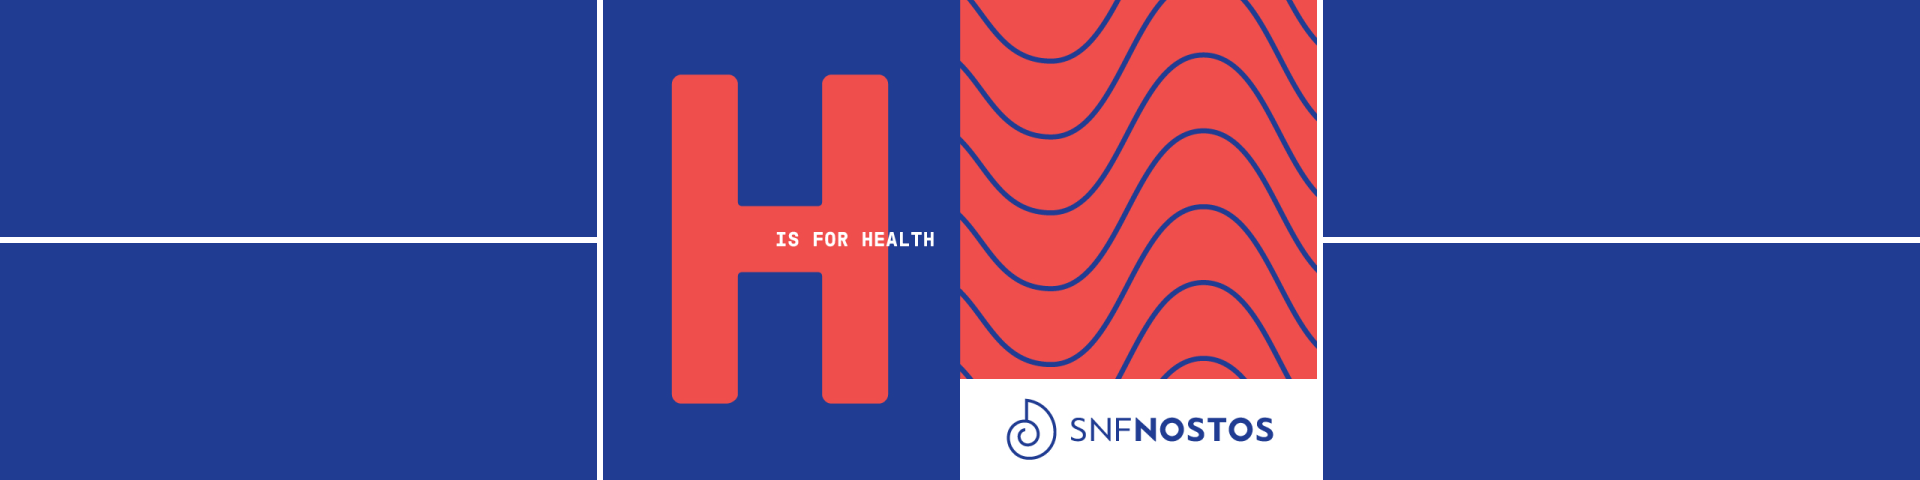 SNF Nostos Health June 23 & 24, 2022 - Εικόνα